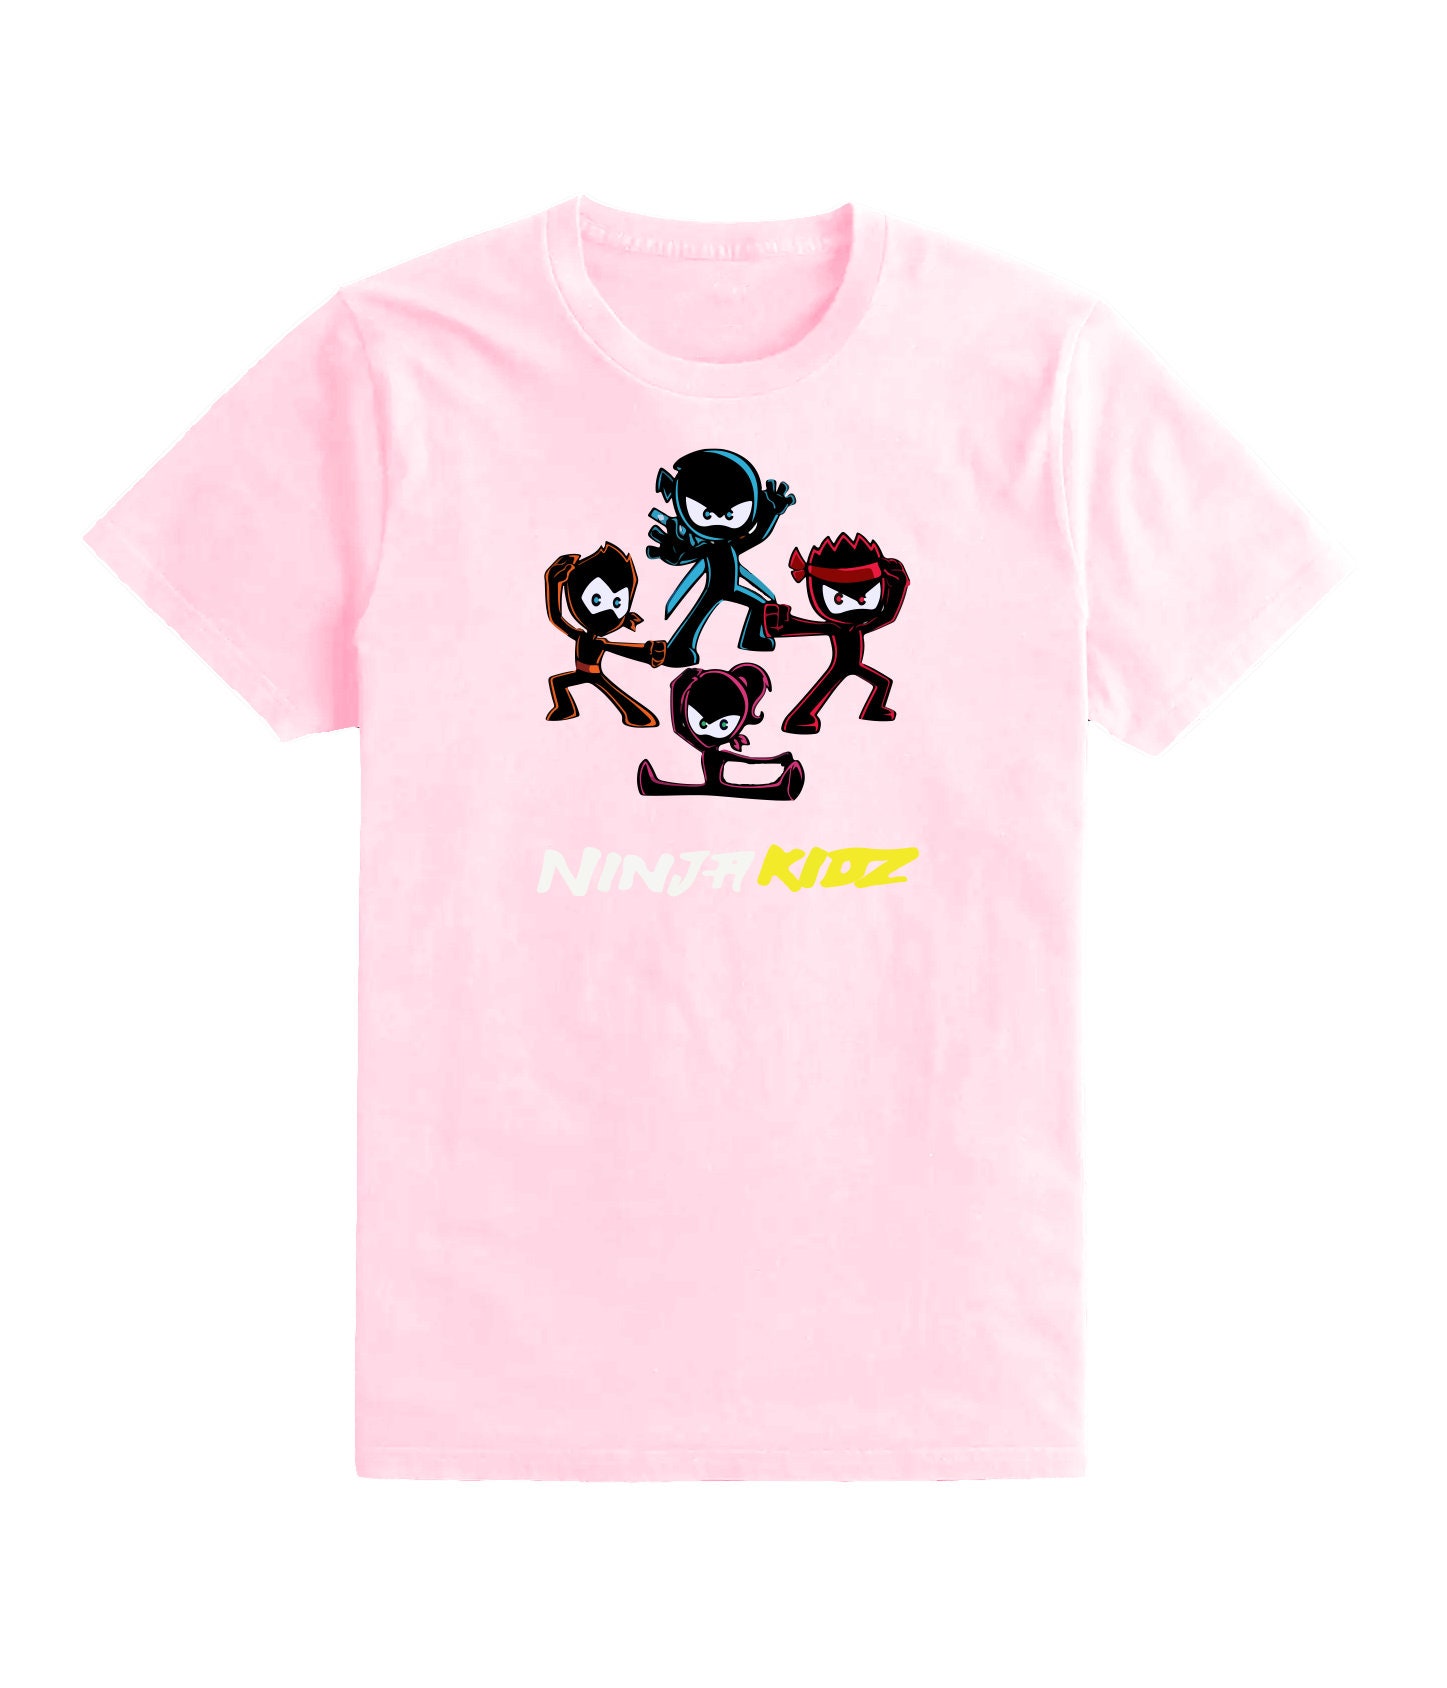 Ninja Kidz Tv Designs Ways Of The Ninja Unisex T-Shirt Unisex T-Shirt -  Teeruto